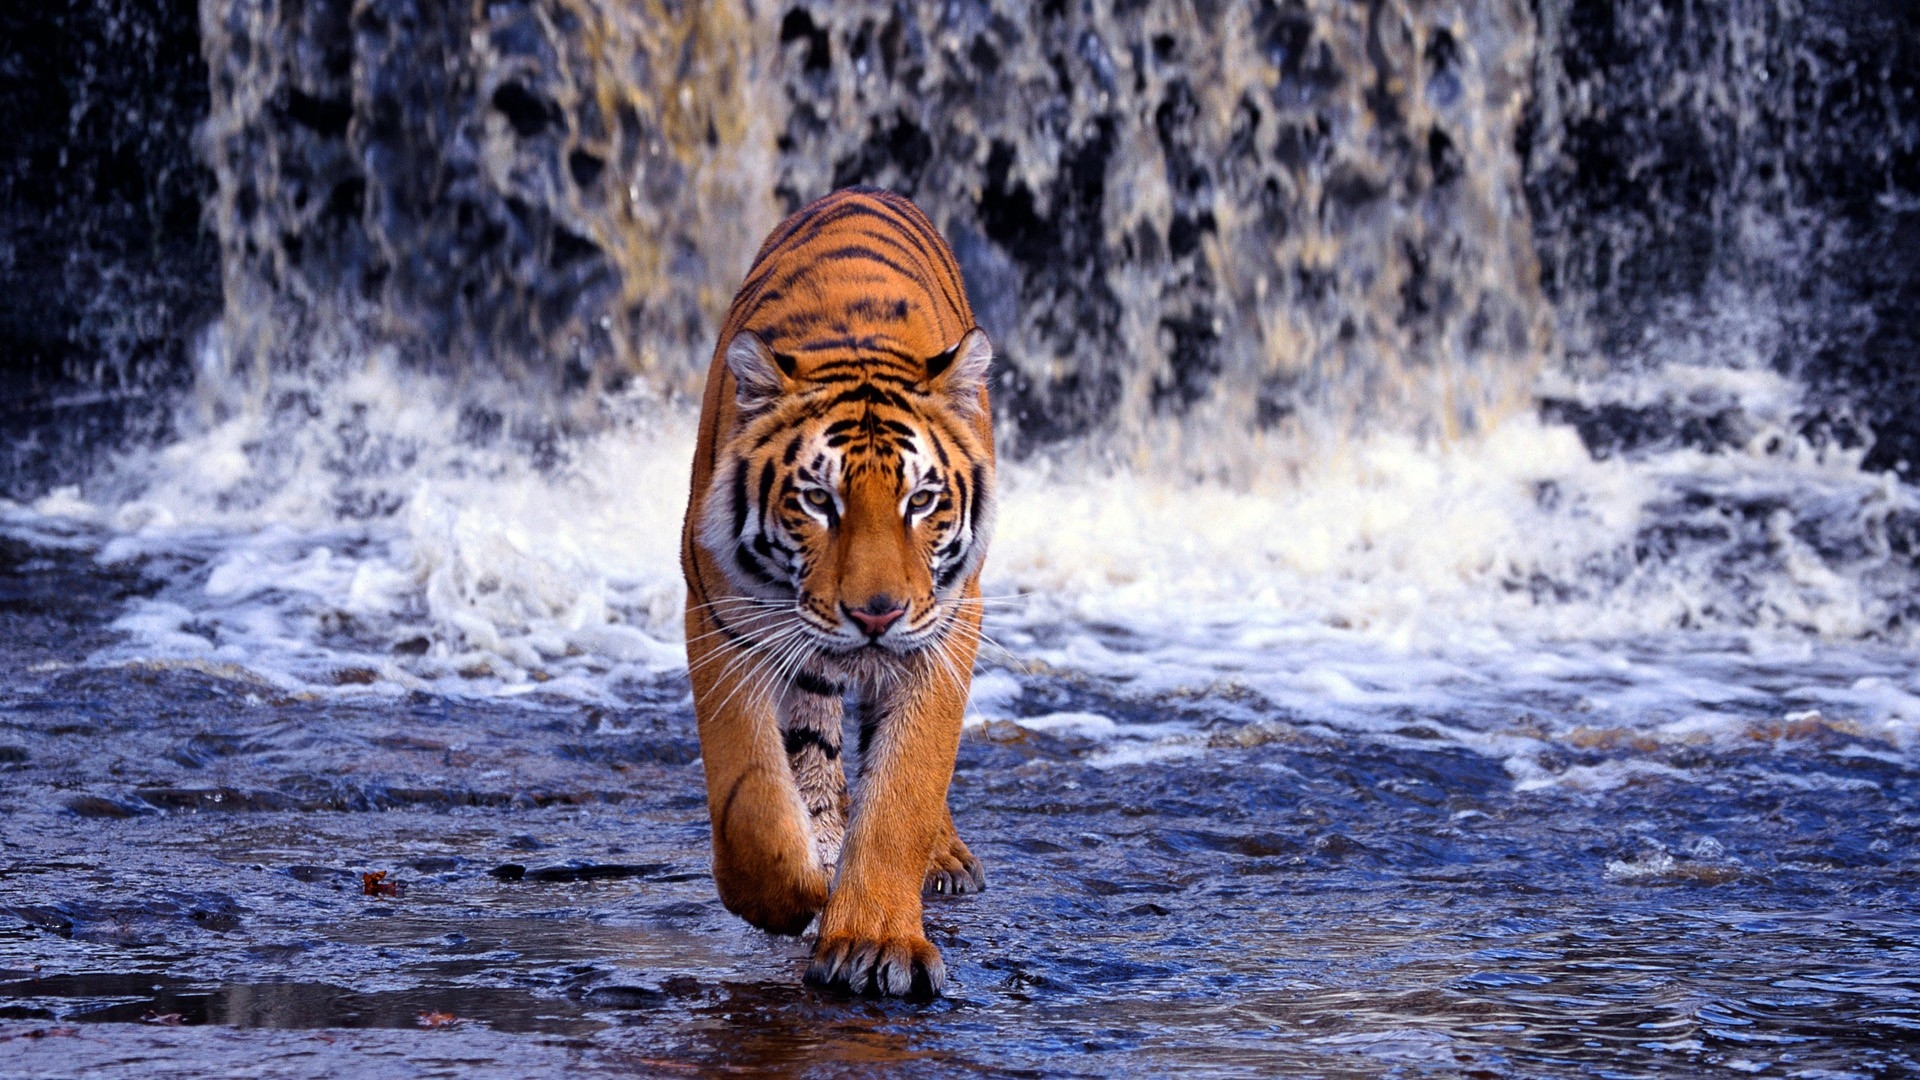 Tiger HD Wallpapers For Desktop Group (90+)